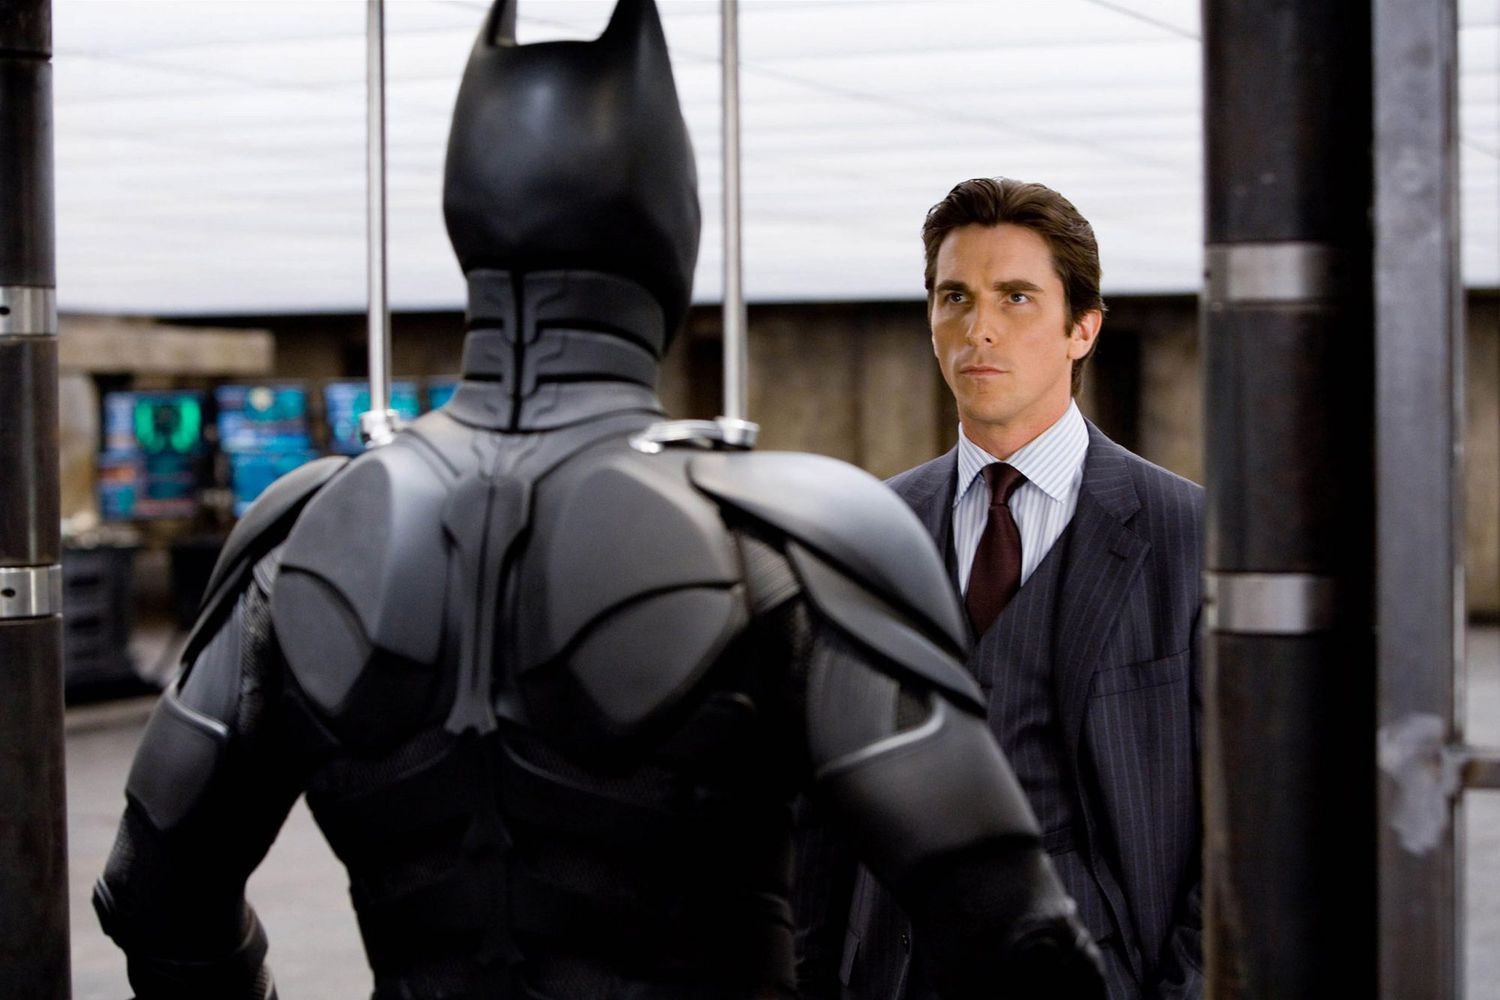 Christian Bale as Batman in Christopher Nolan's The Dark Knight Trilogy